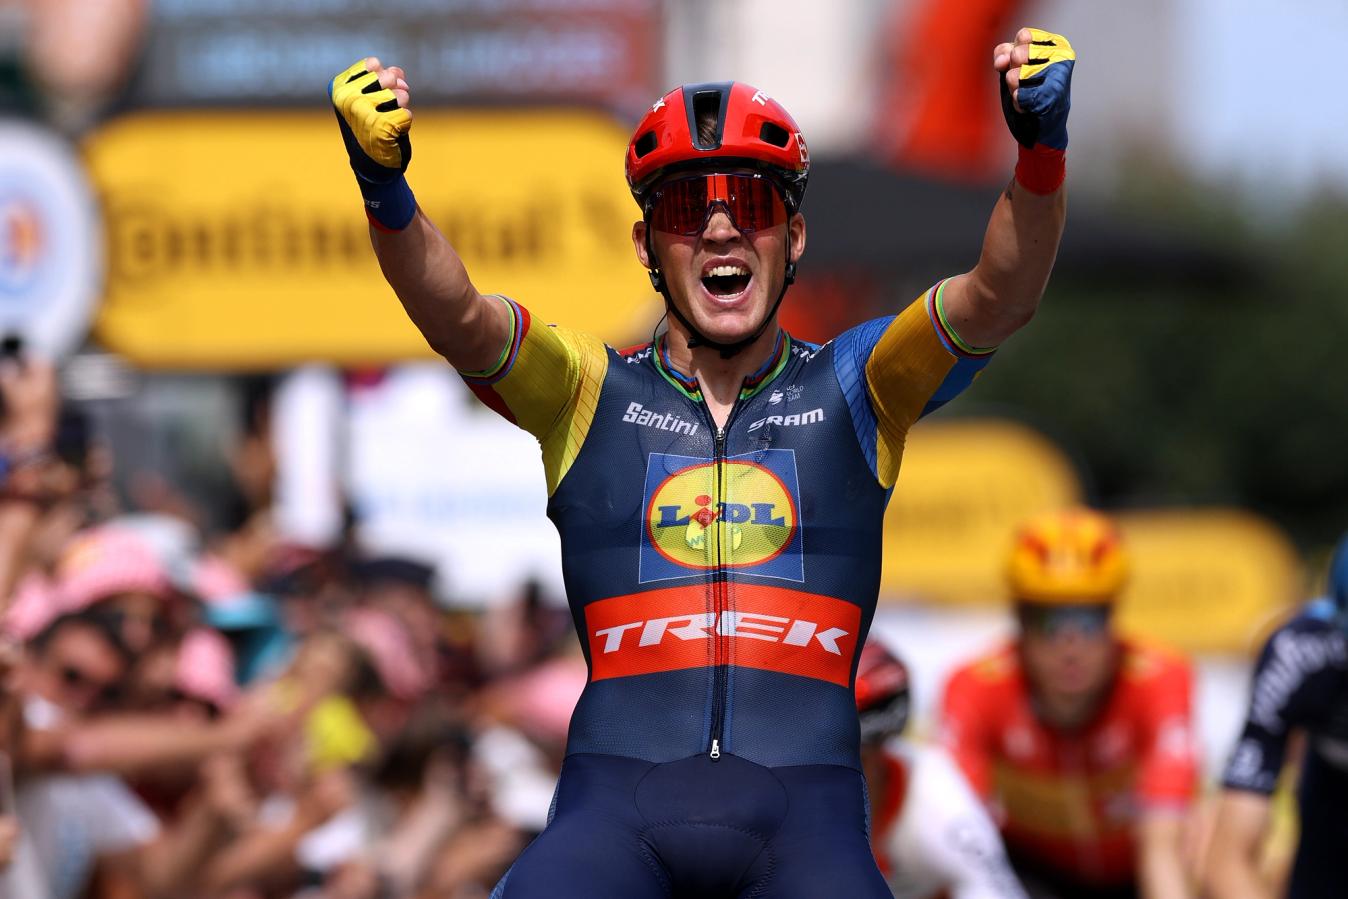 Mads Pedersen won stage 8 of the Tour de France